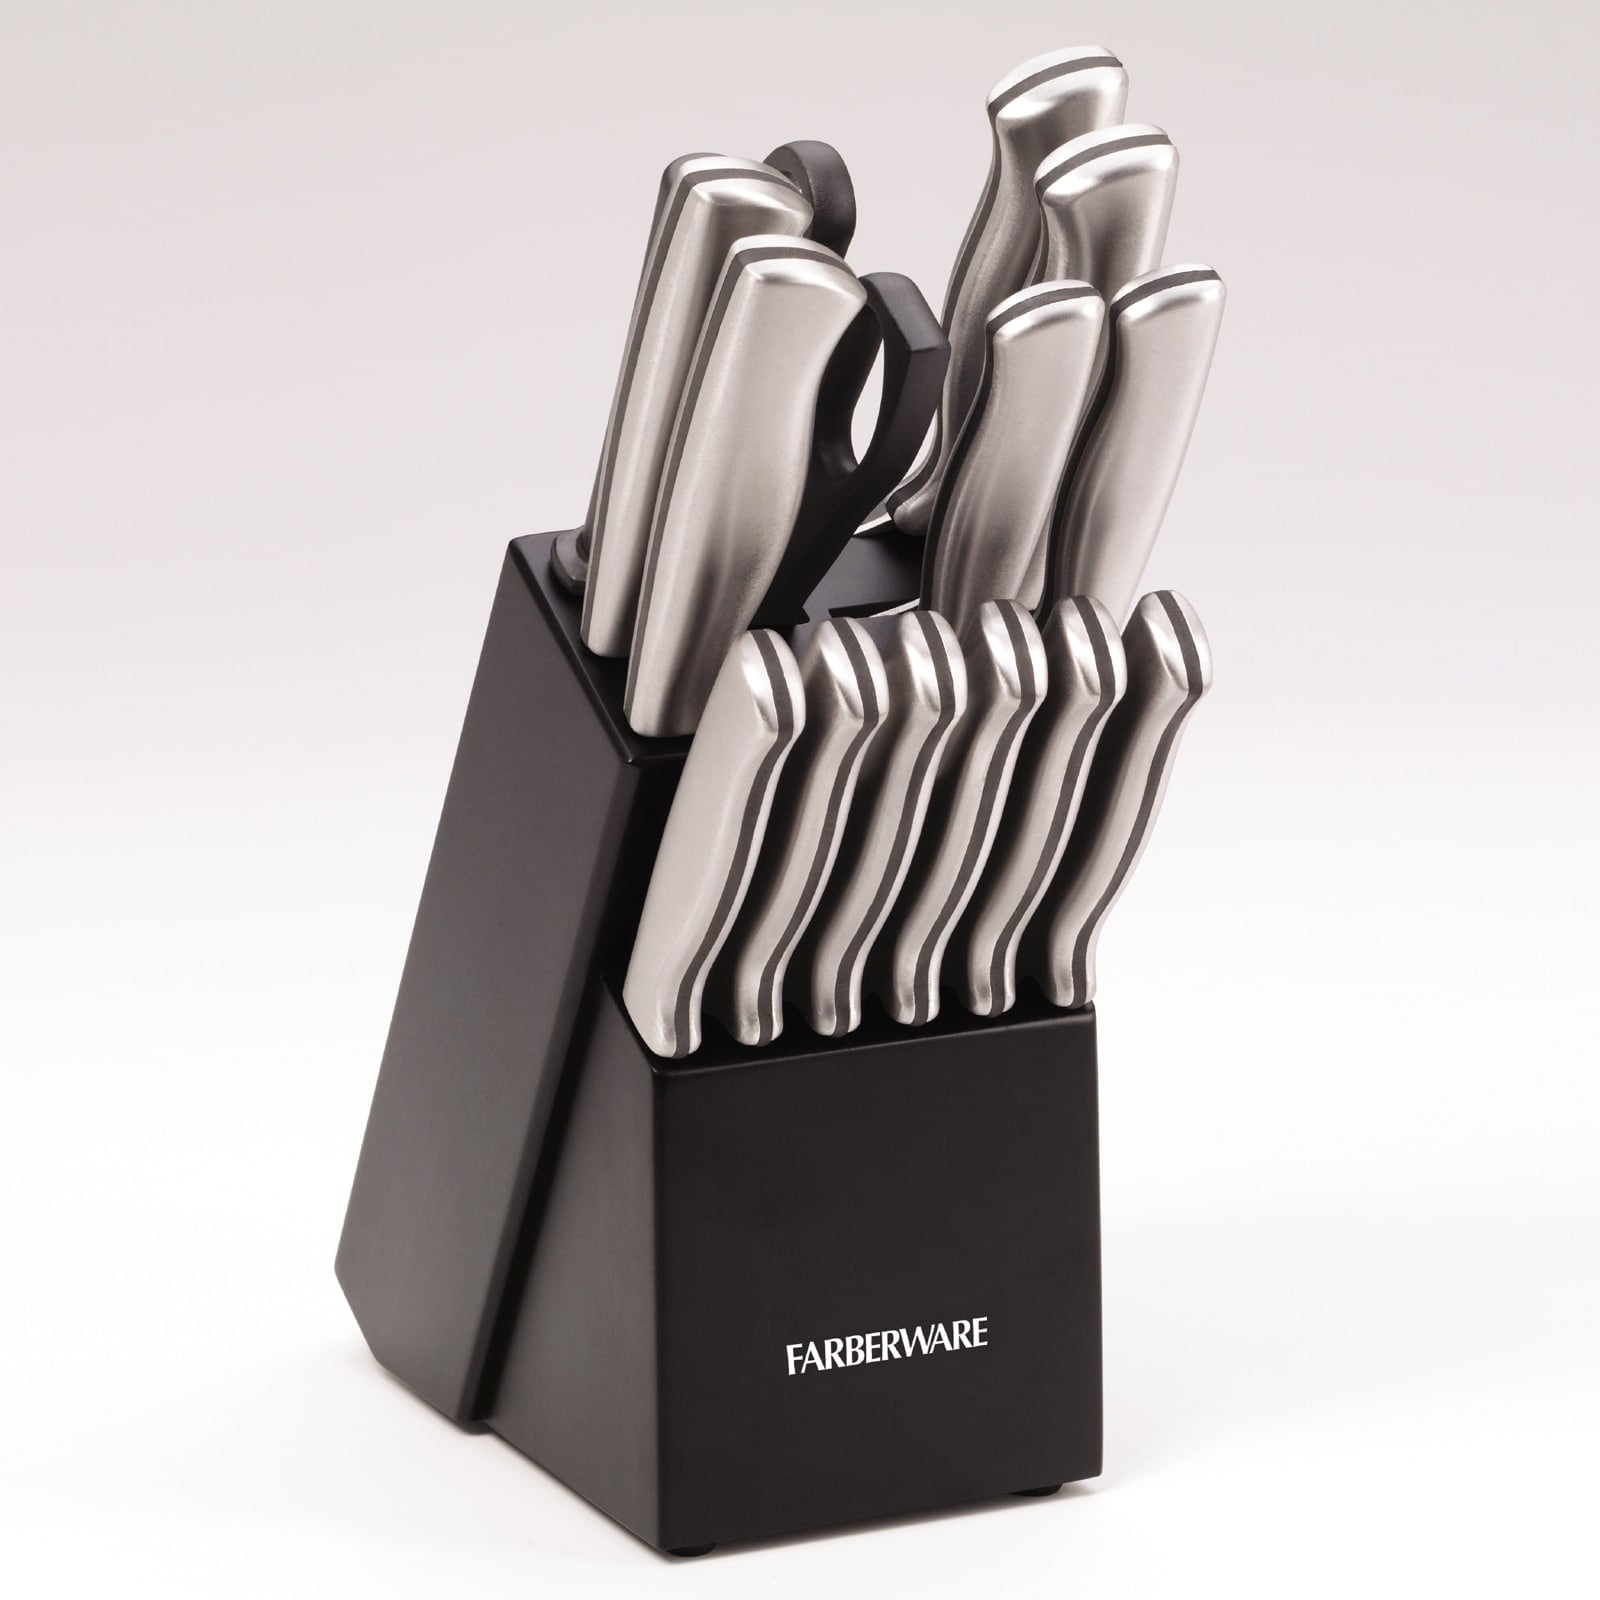 Farberware Platinum Cutlery Set, Stainless Steel, 15 Piece